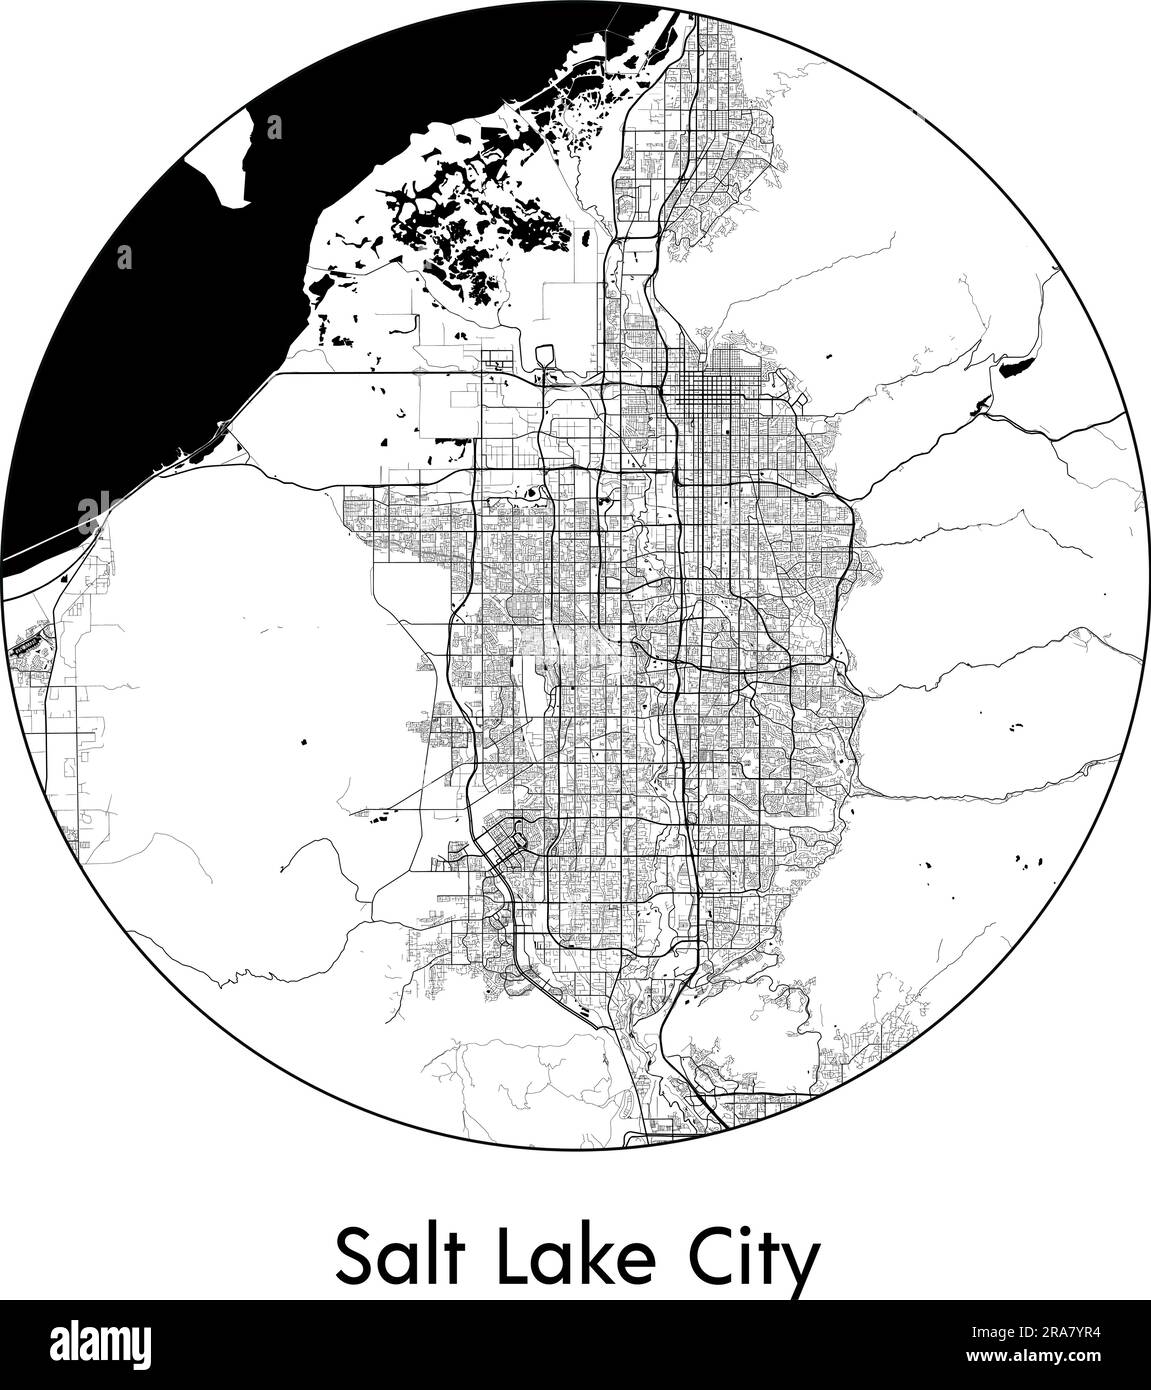 Stadtplan Salt Lake City USA Nordamerika Vektordarstellung schwarz weiß Stock Vektor